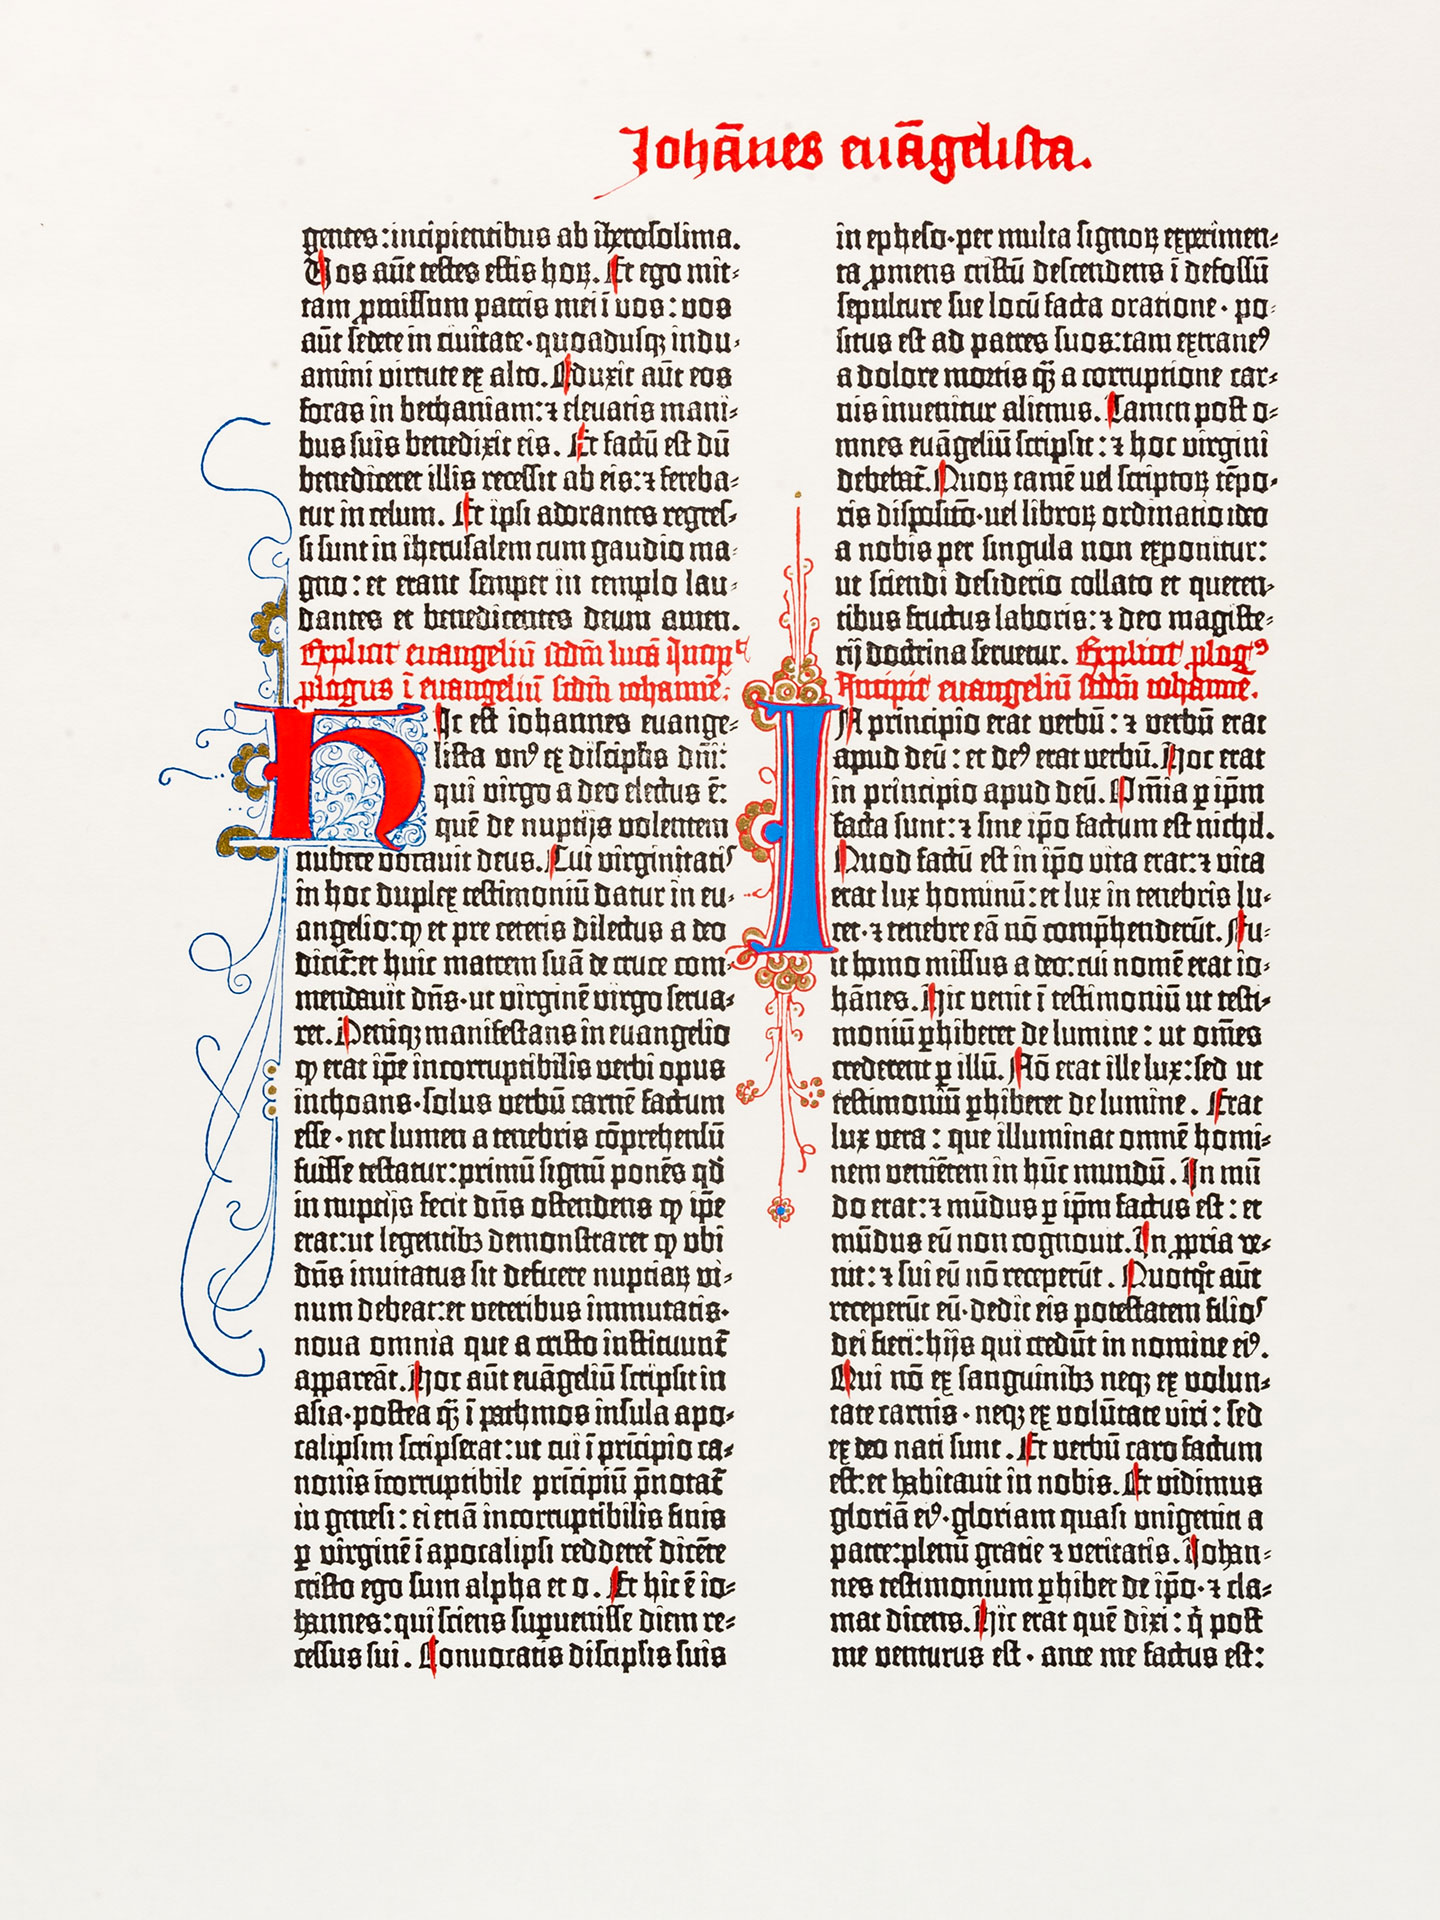 The Gospel of St. John. Press print from the Gutenberg Bible